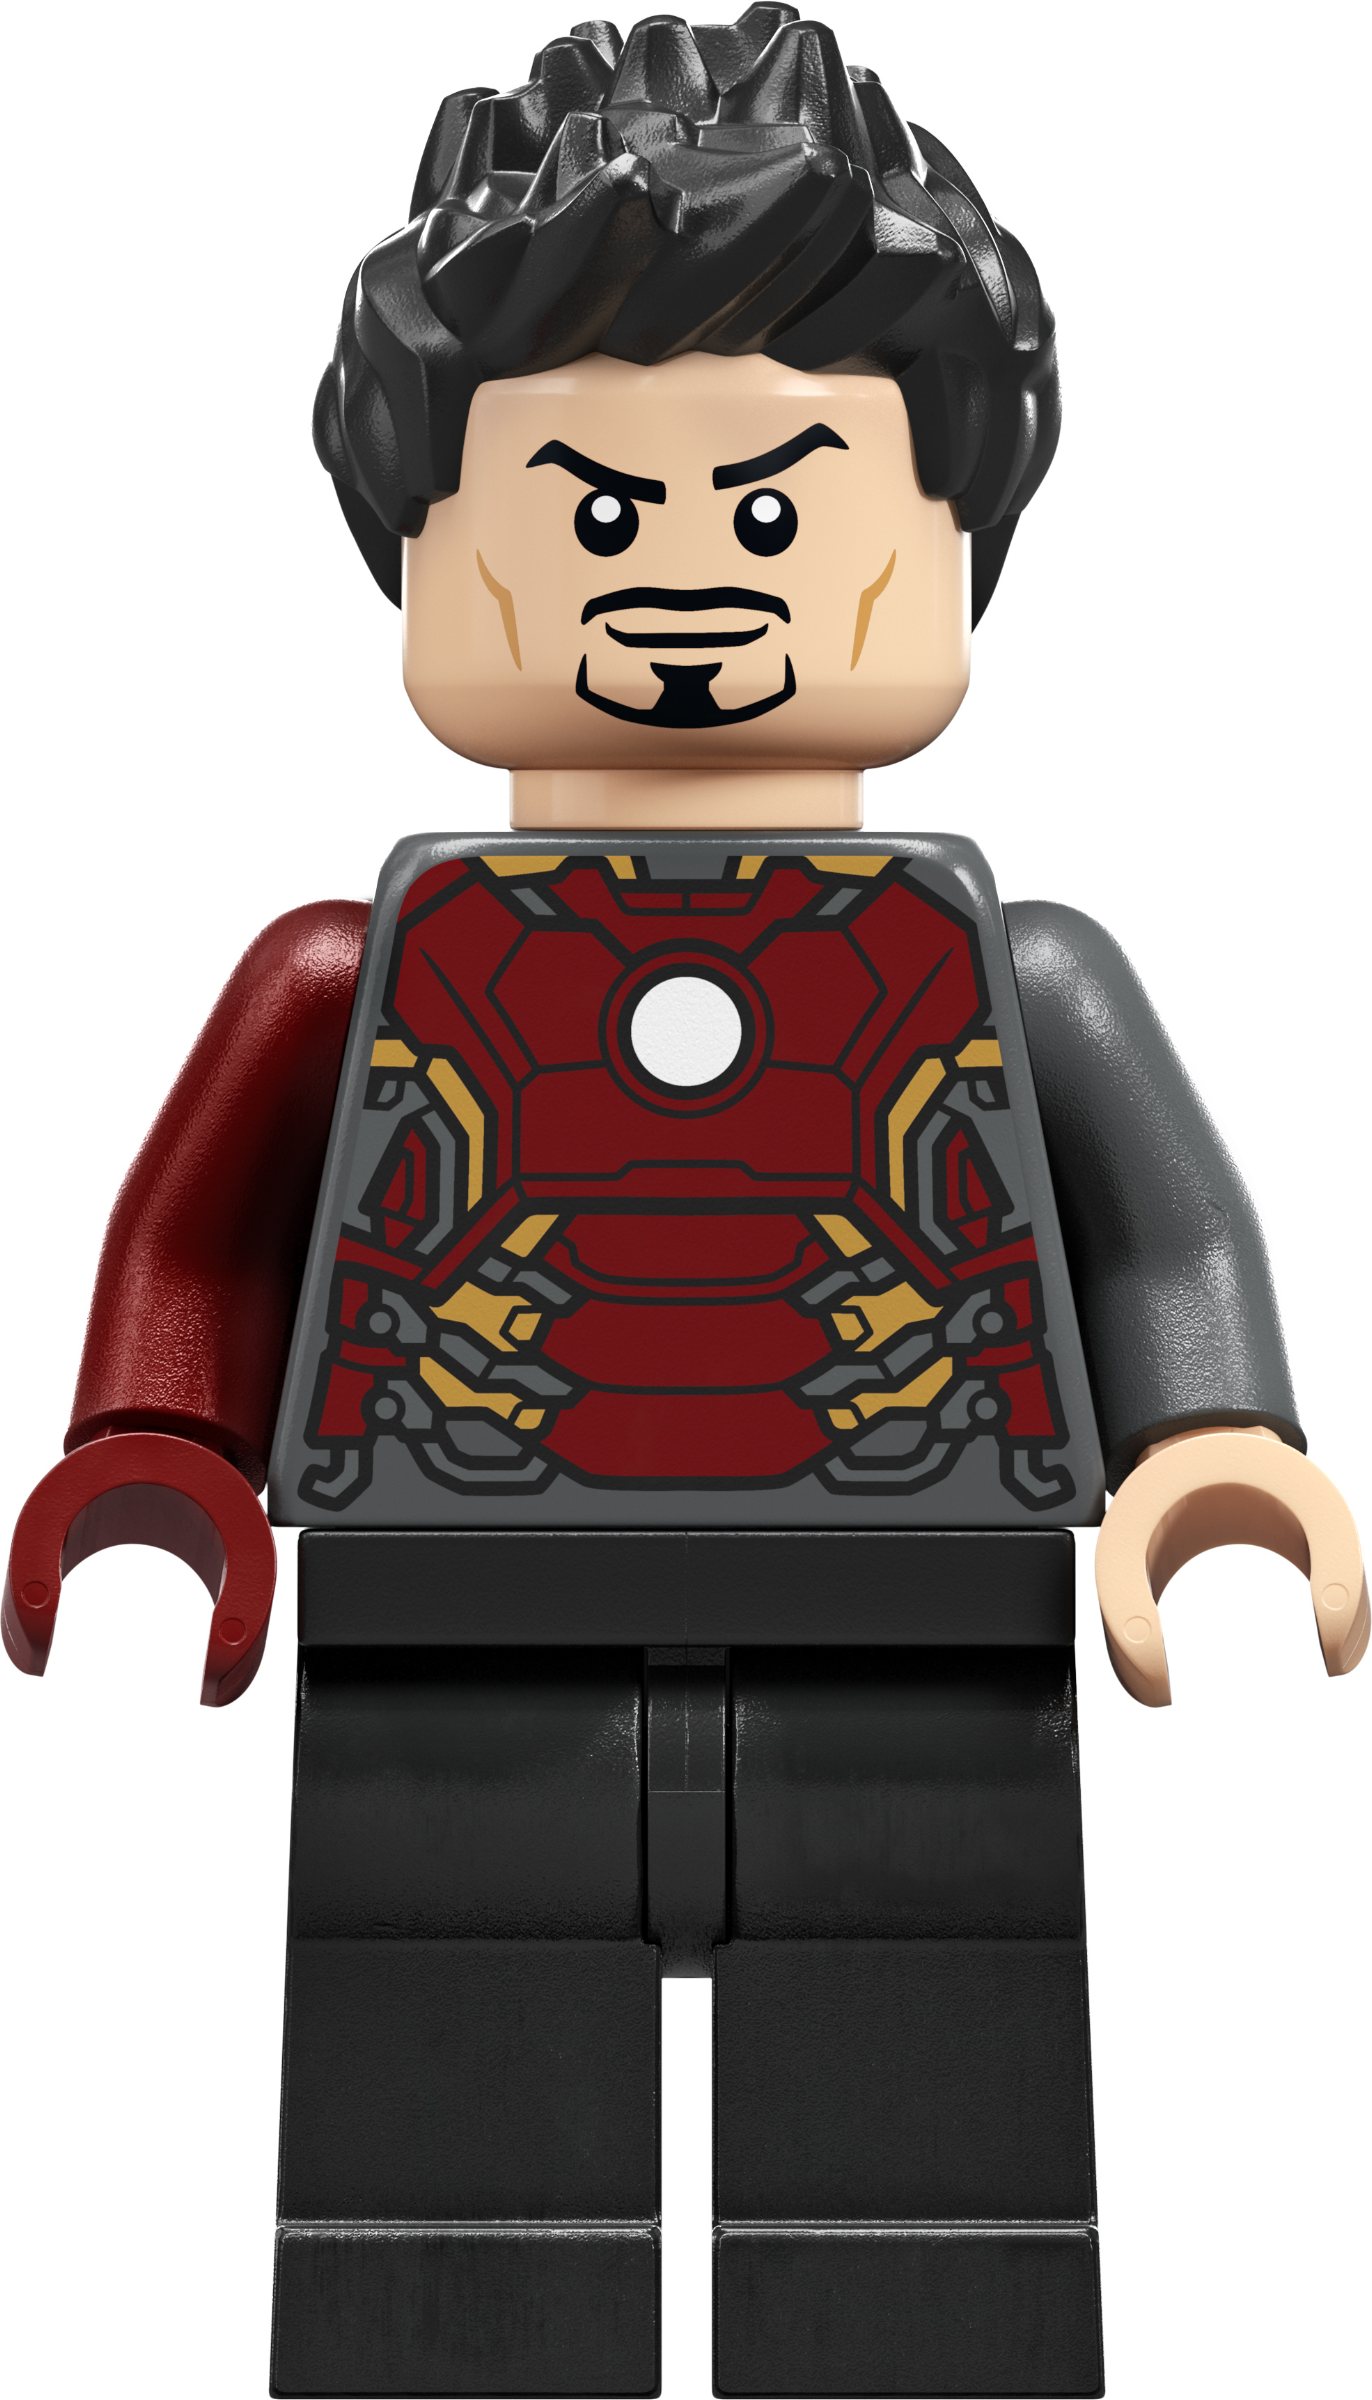 Iron Man, Brickipedia